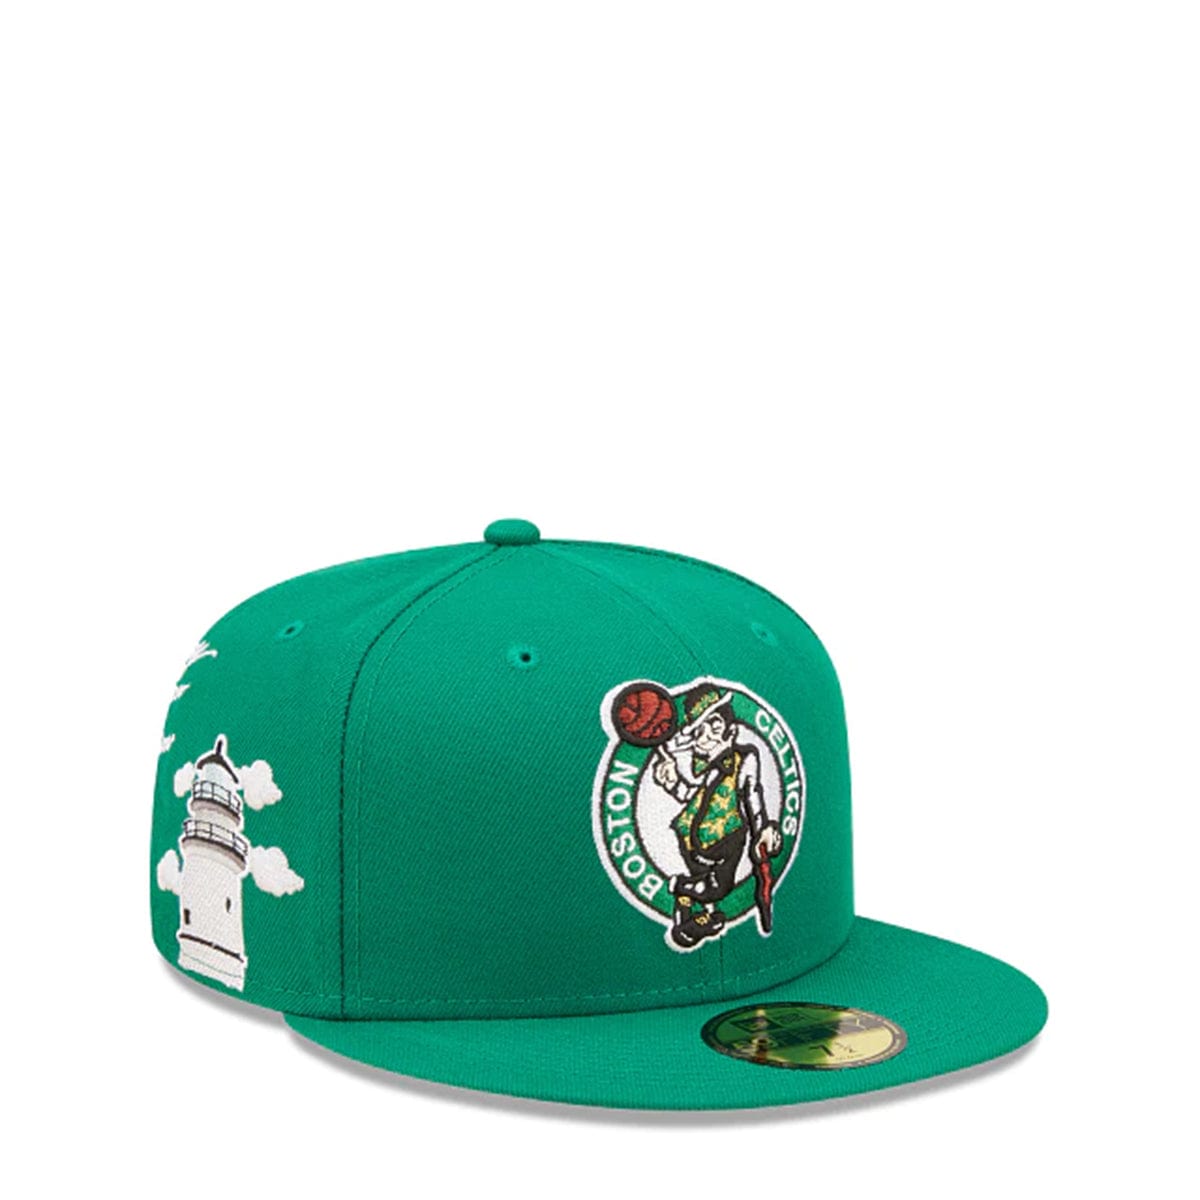 Men's New Era Pink/Light Blue Boston Celtics Paisley Visor 59FIFTY Fitted  Hat